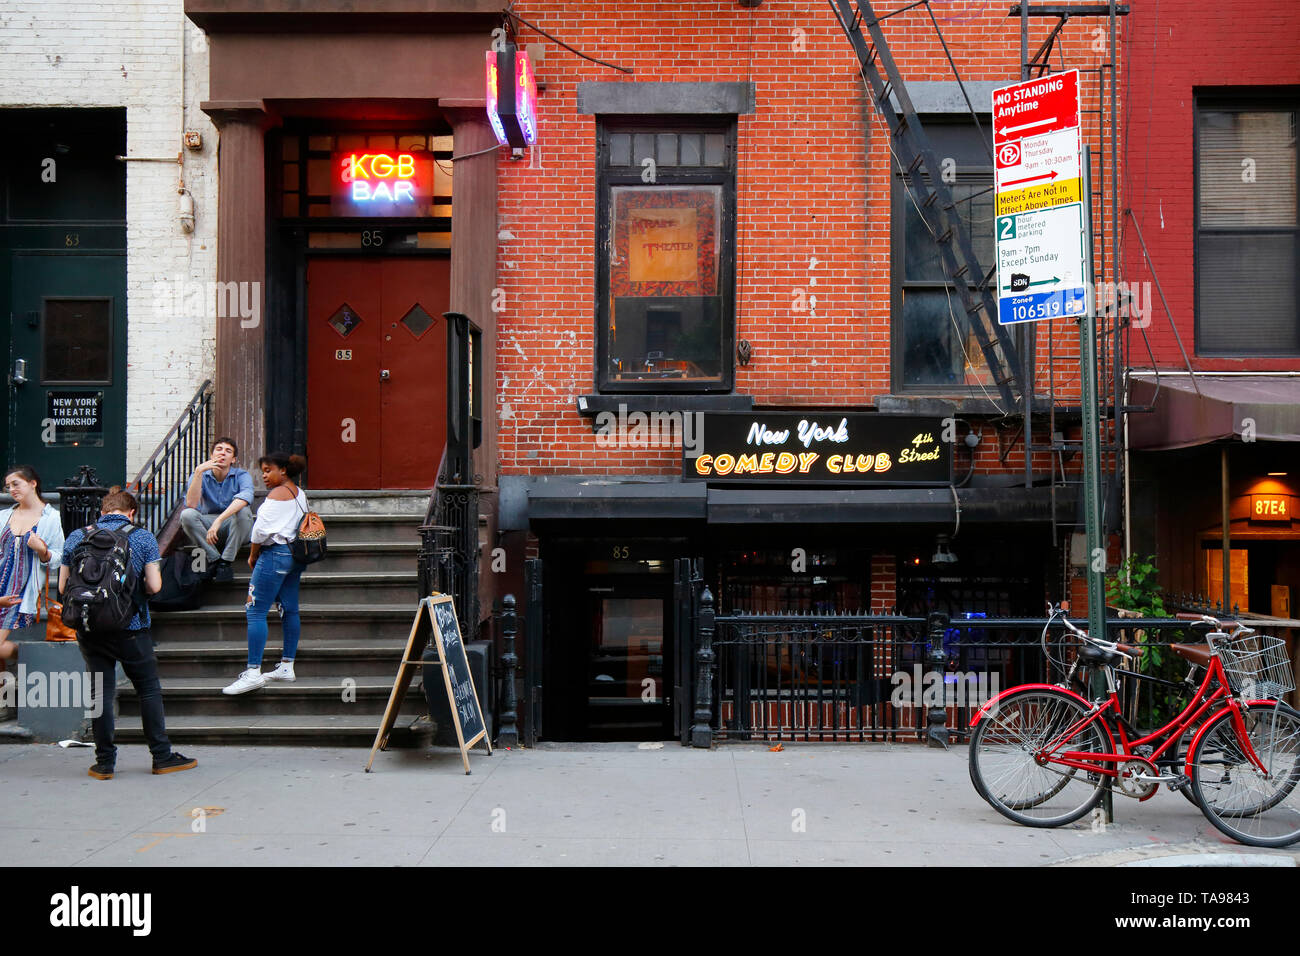 The Red Room, KGB Bar, New York Comedy Club, 85 E 4th St, New York, NYC Frente exterior de un bar y club de comedia en East Village de Manhattan Foto de stock